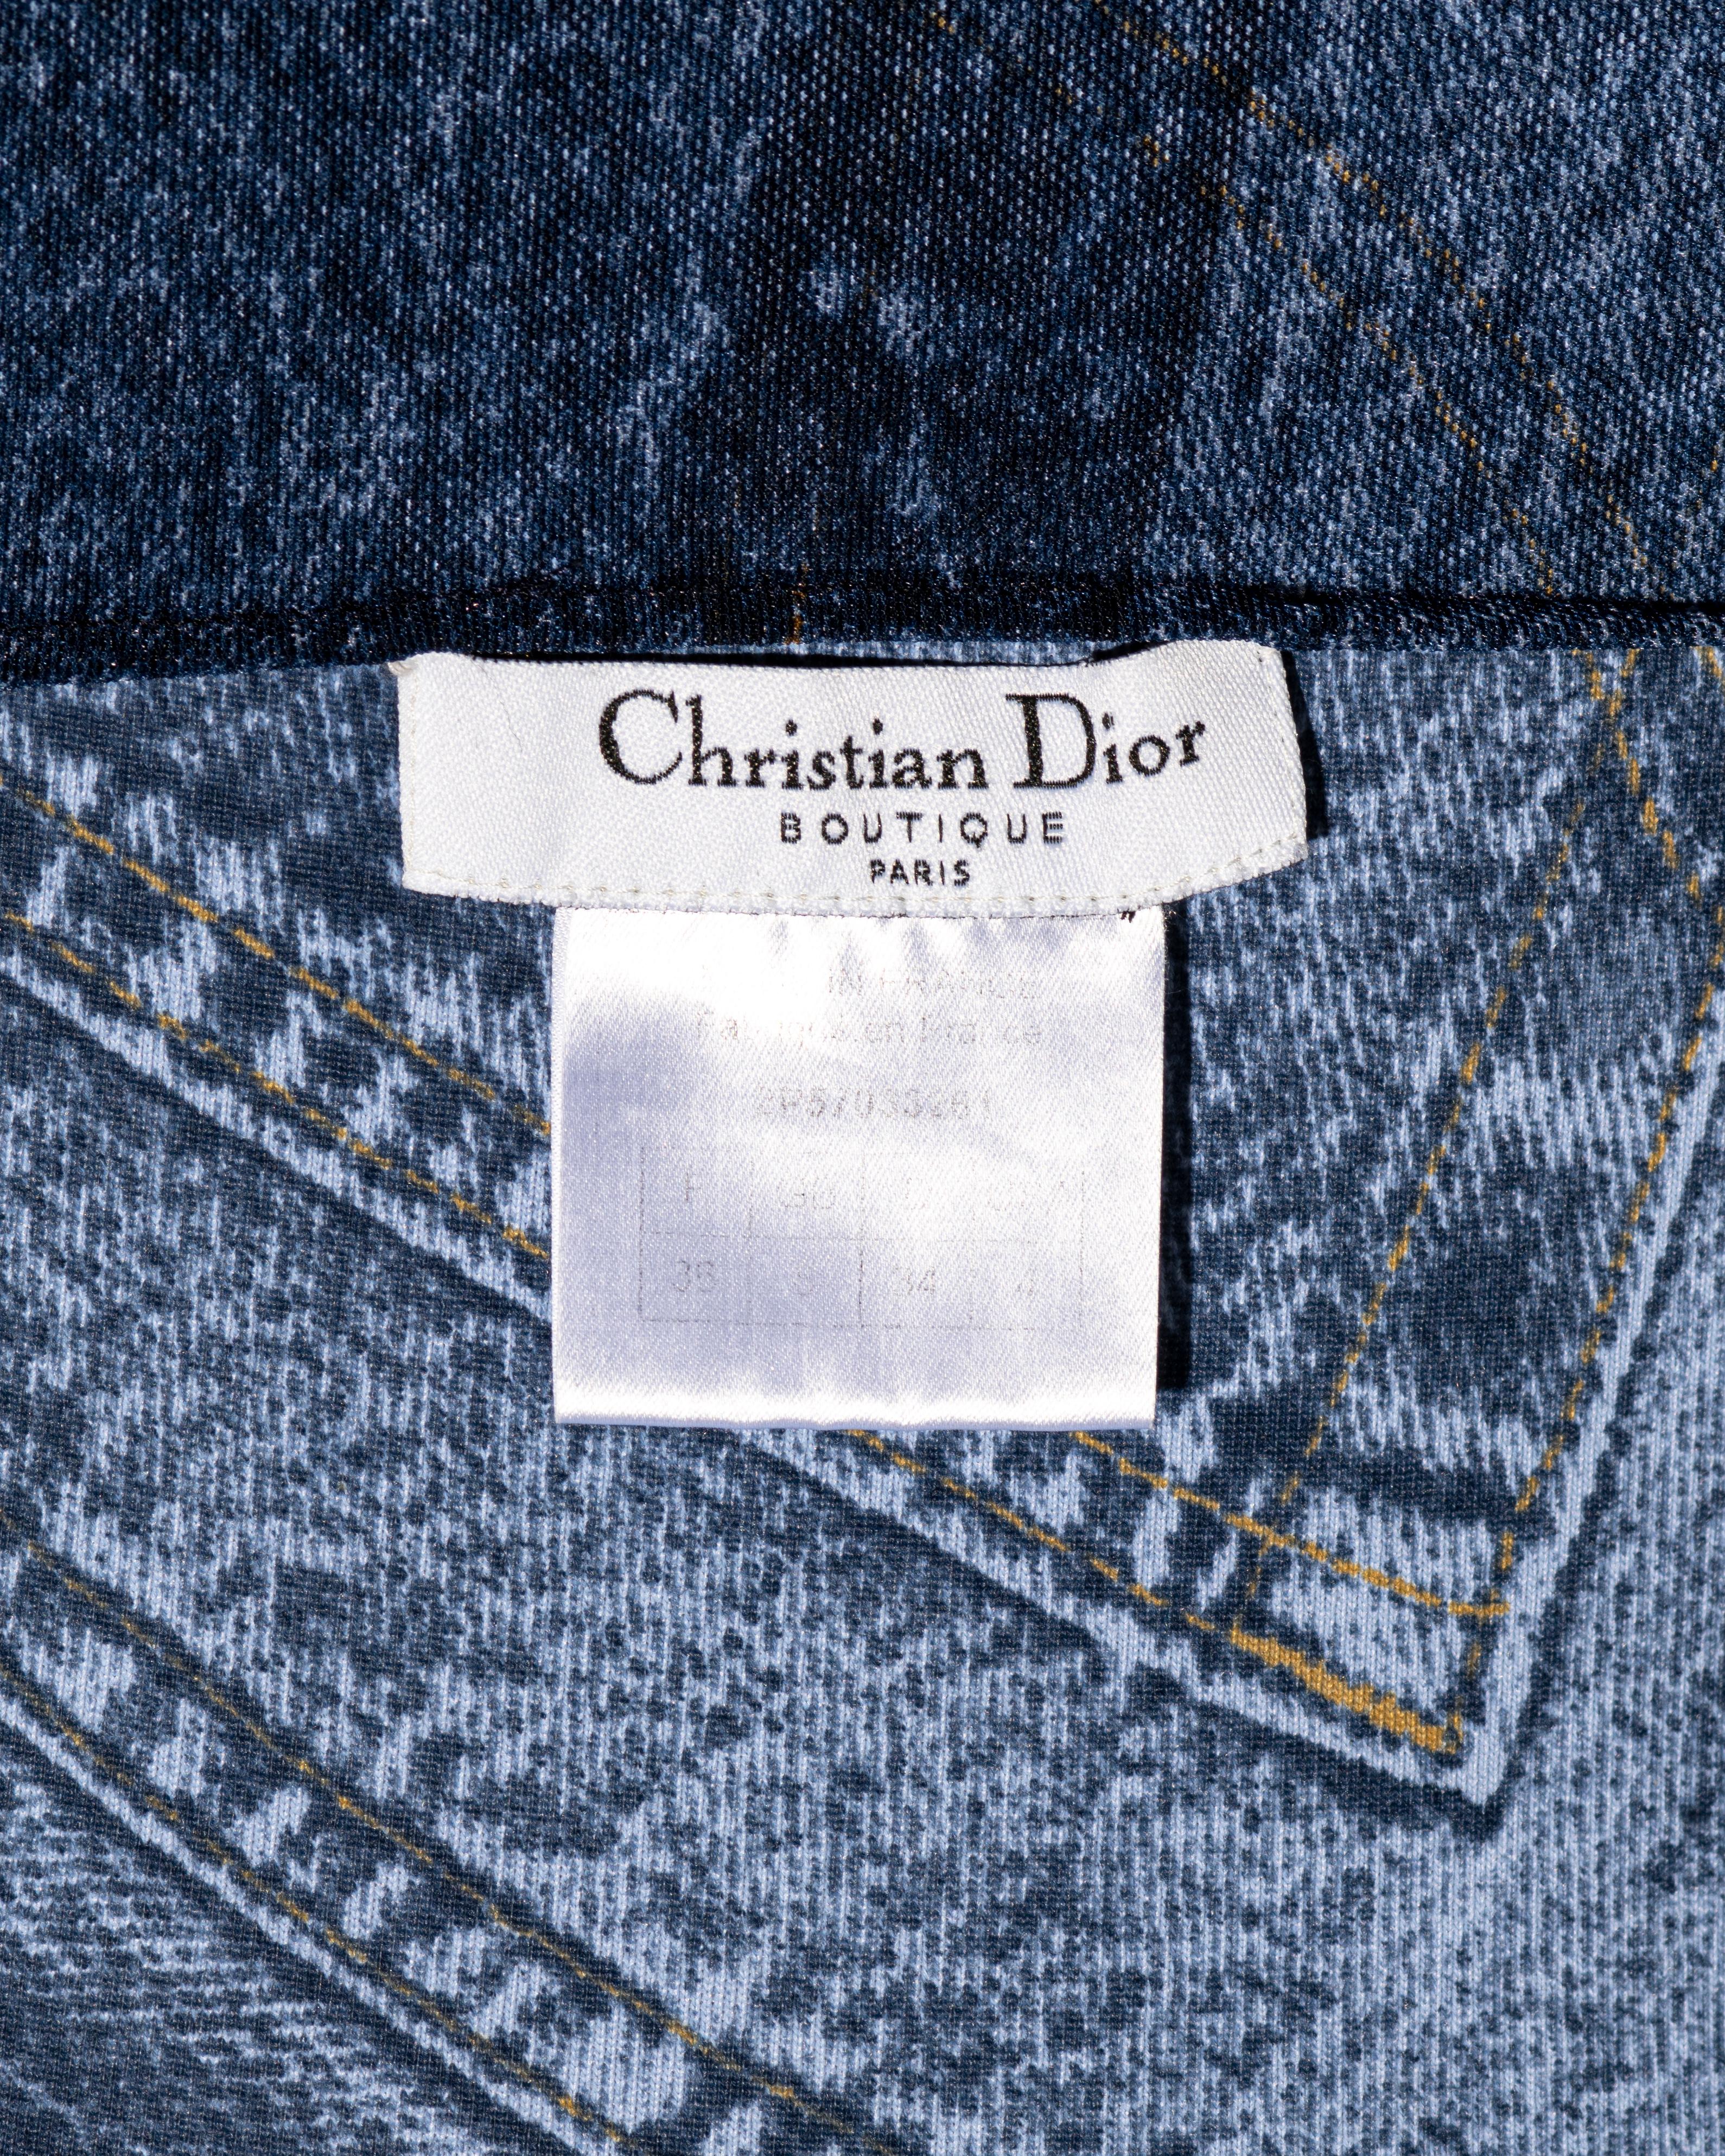 Christian Dior by John Galliano denim print bodysuit and sarong skirt, ss 2002 3